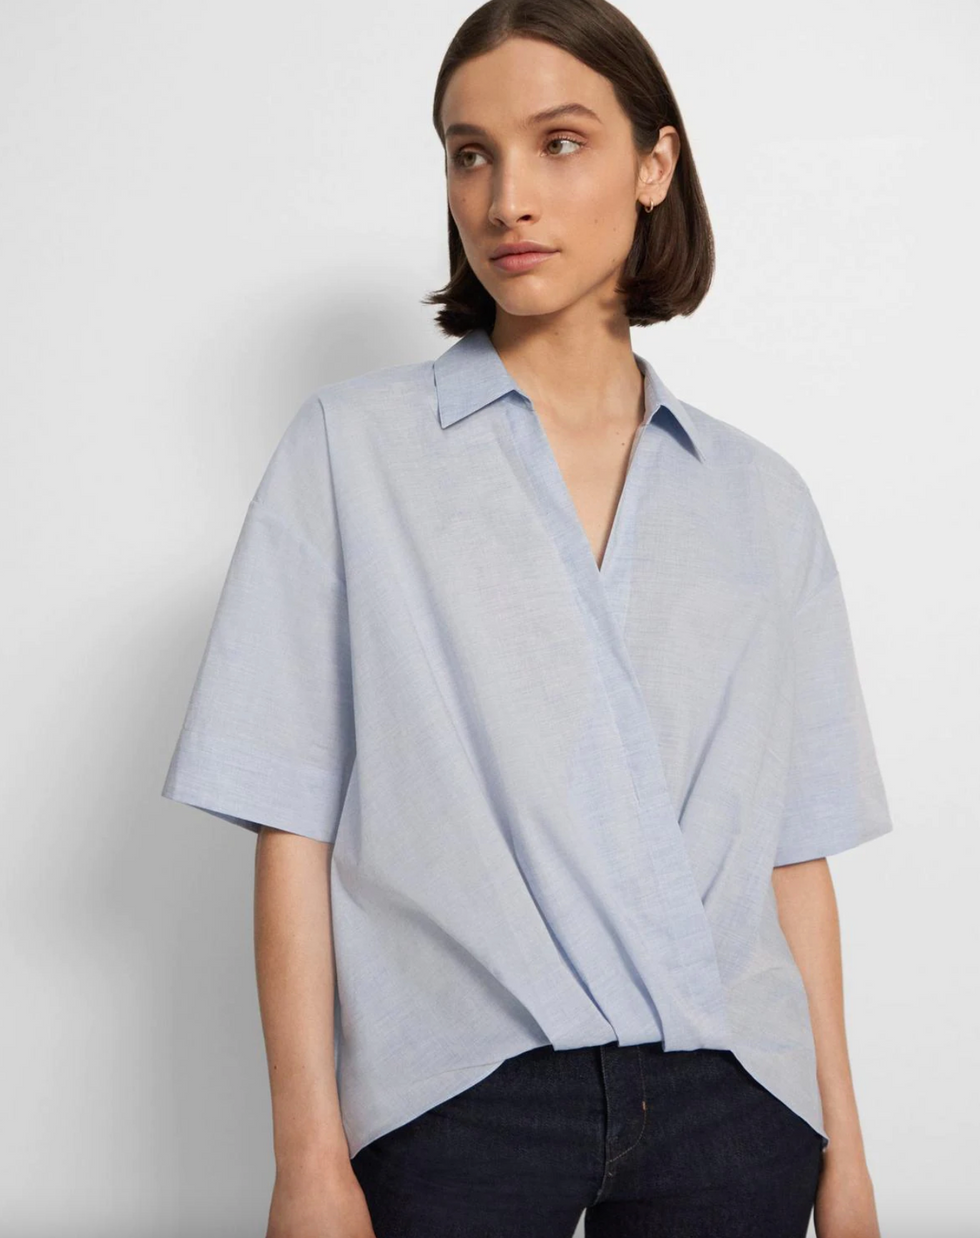 Theory Twist Short-Sleeve Shirt in Cotton Melange